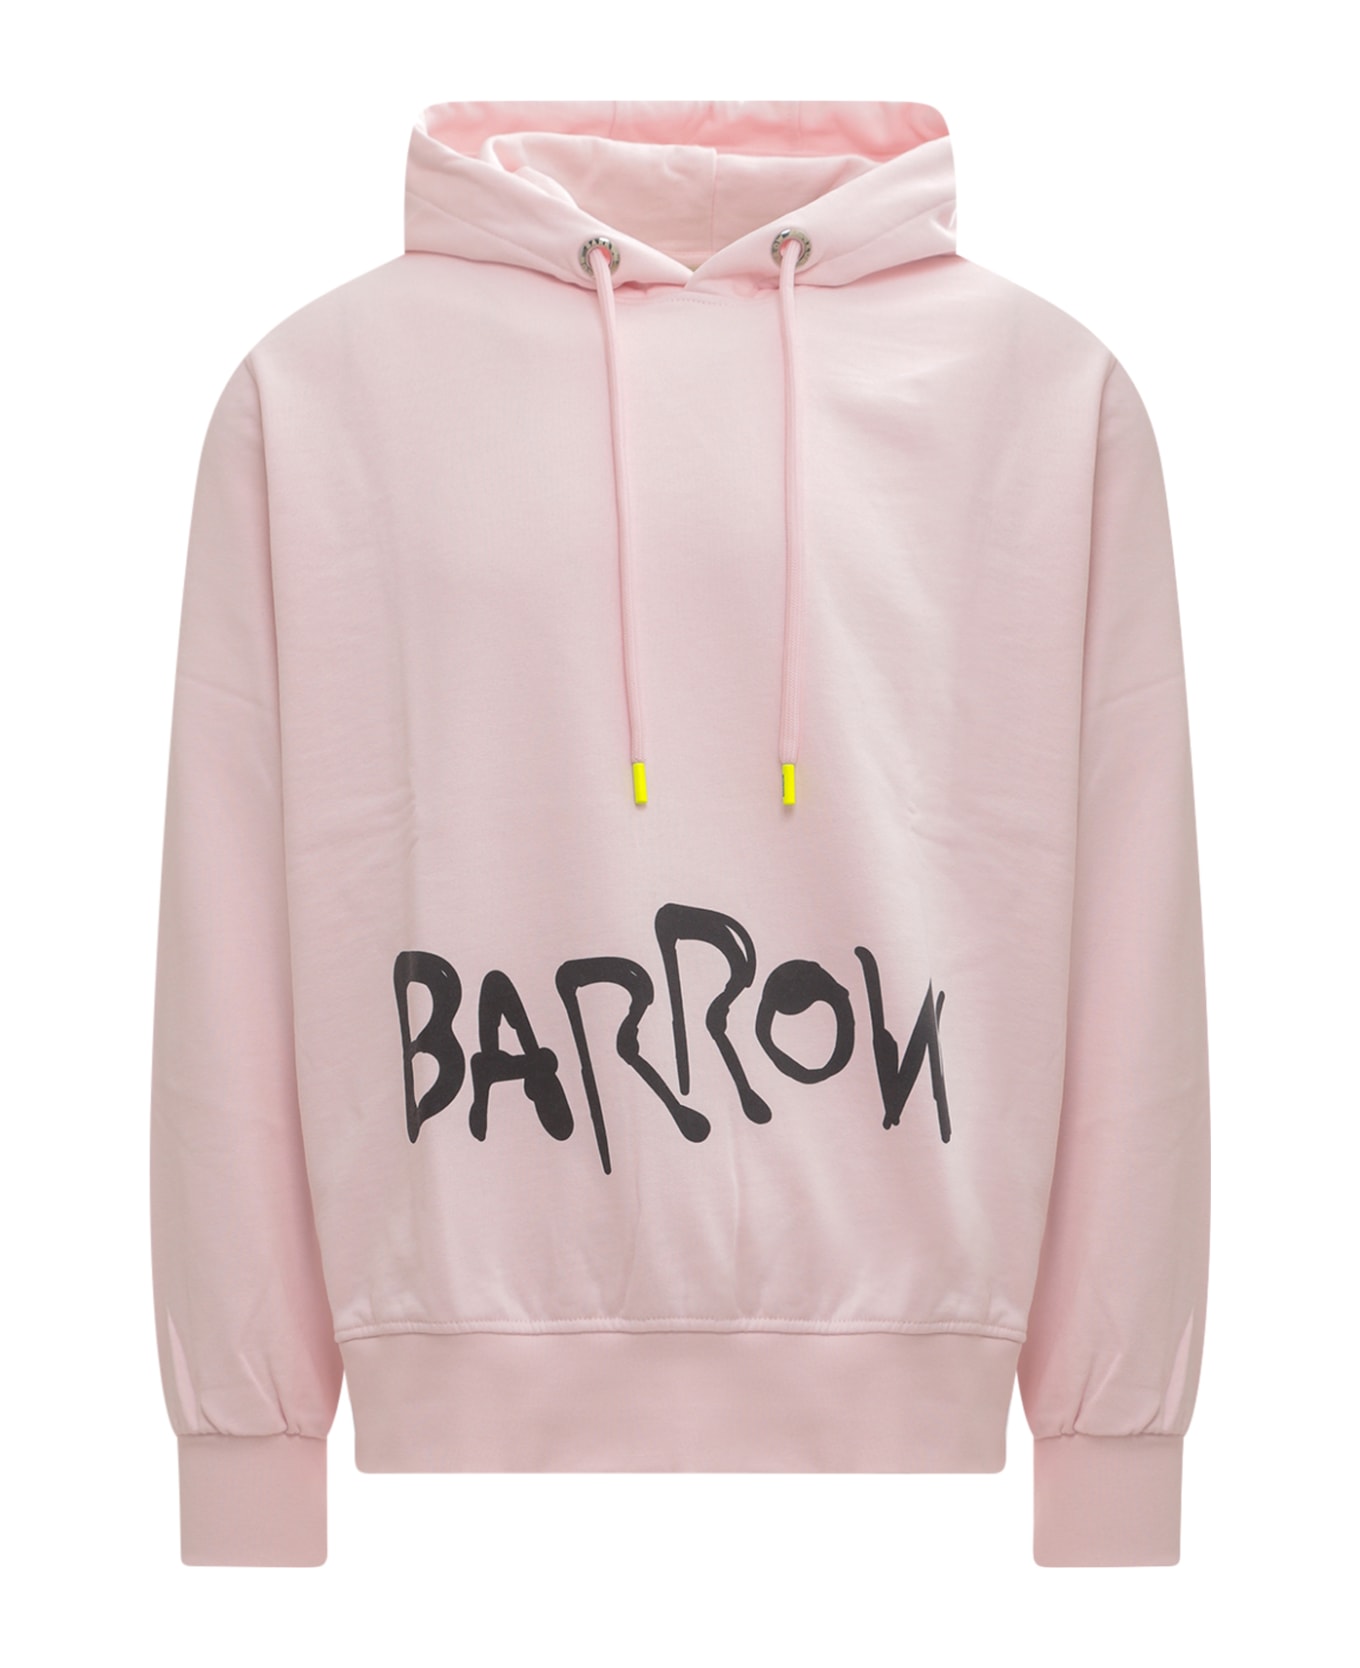 Barrow Sweatshirt - Light Pink